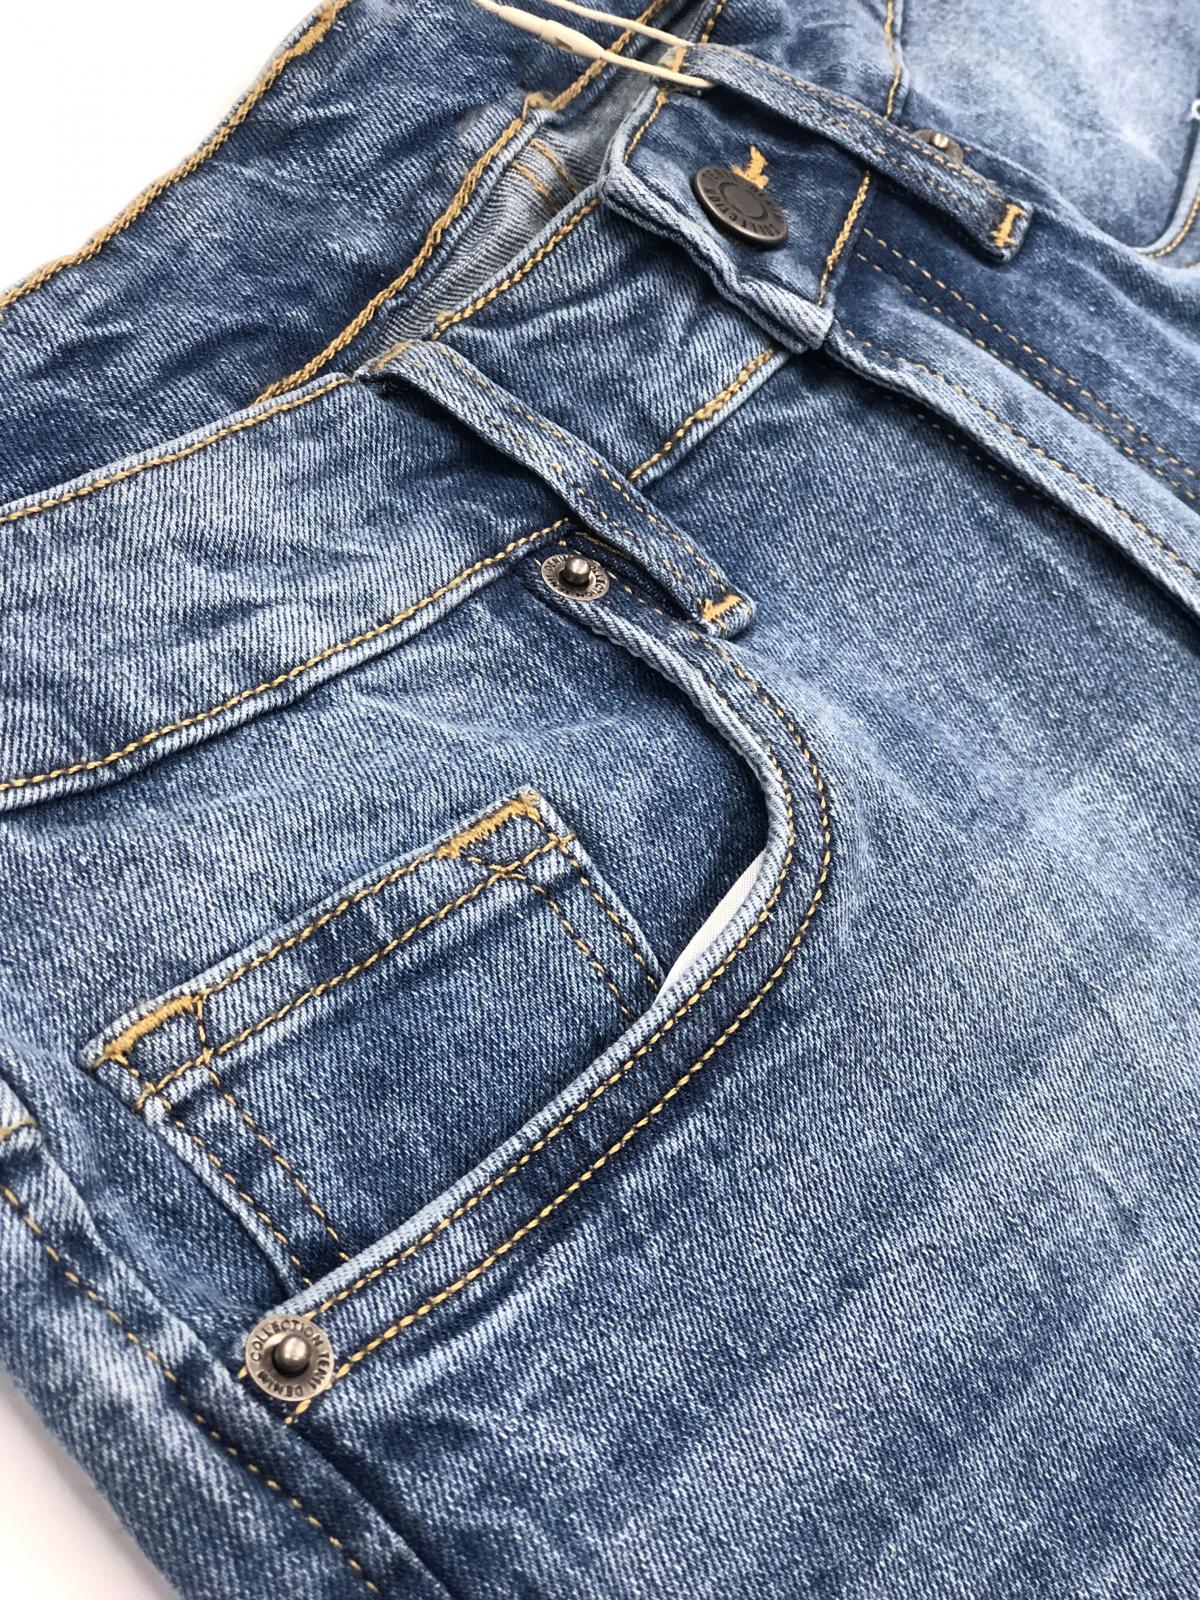 Men's Jeans Shorts SS0003 #3